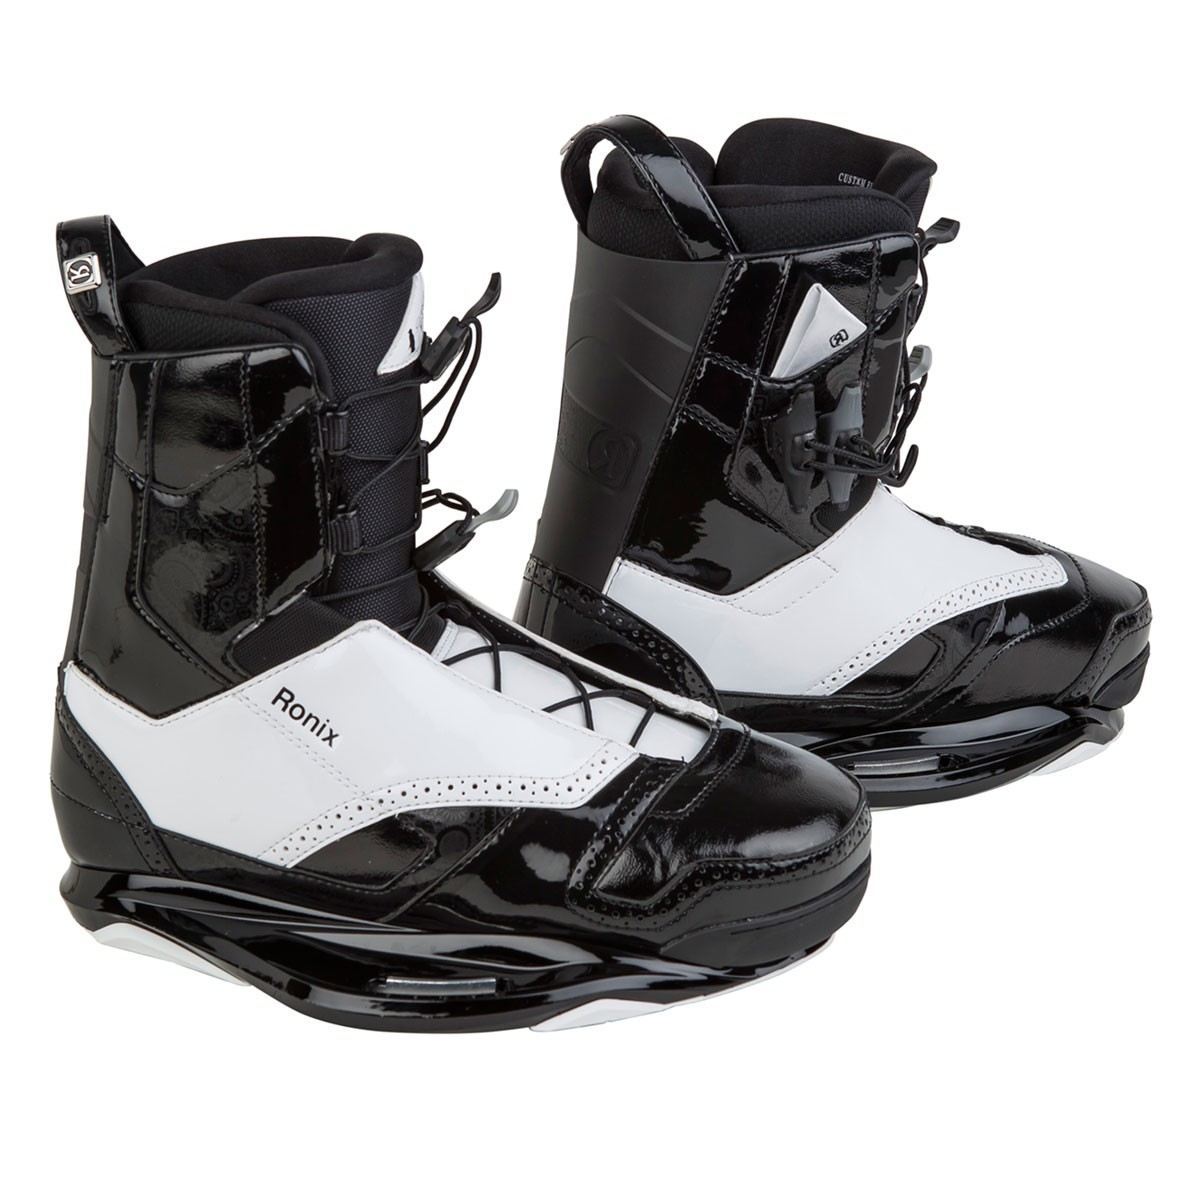 2015-ronix-boots-frank-black-02